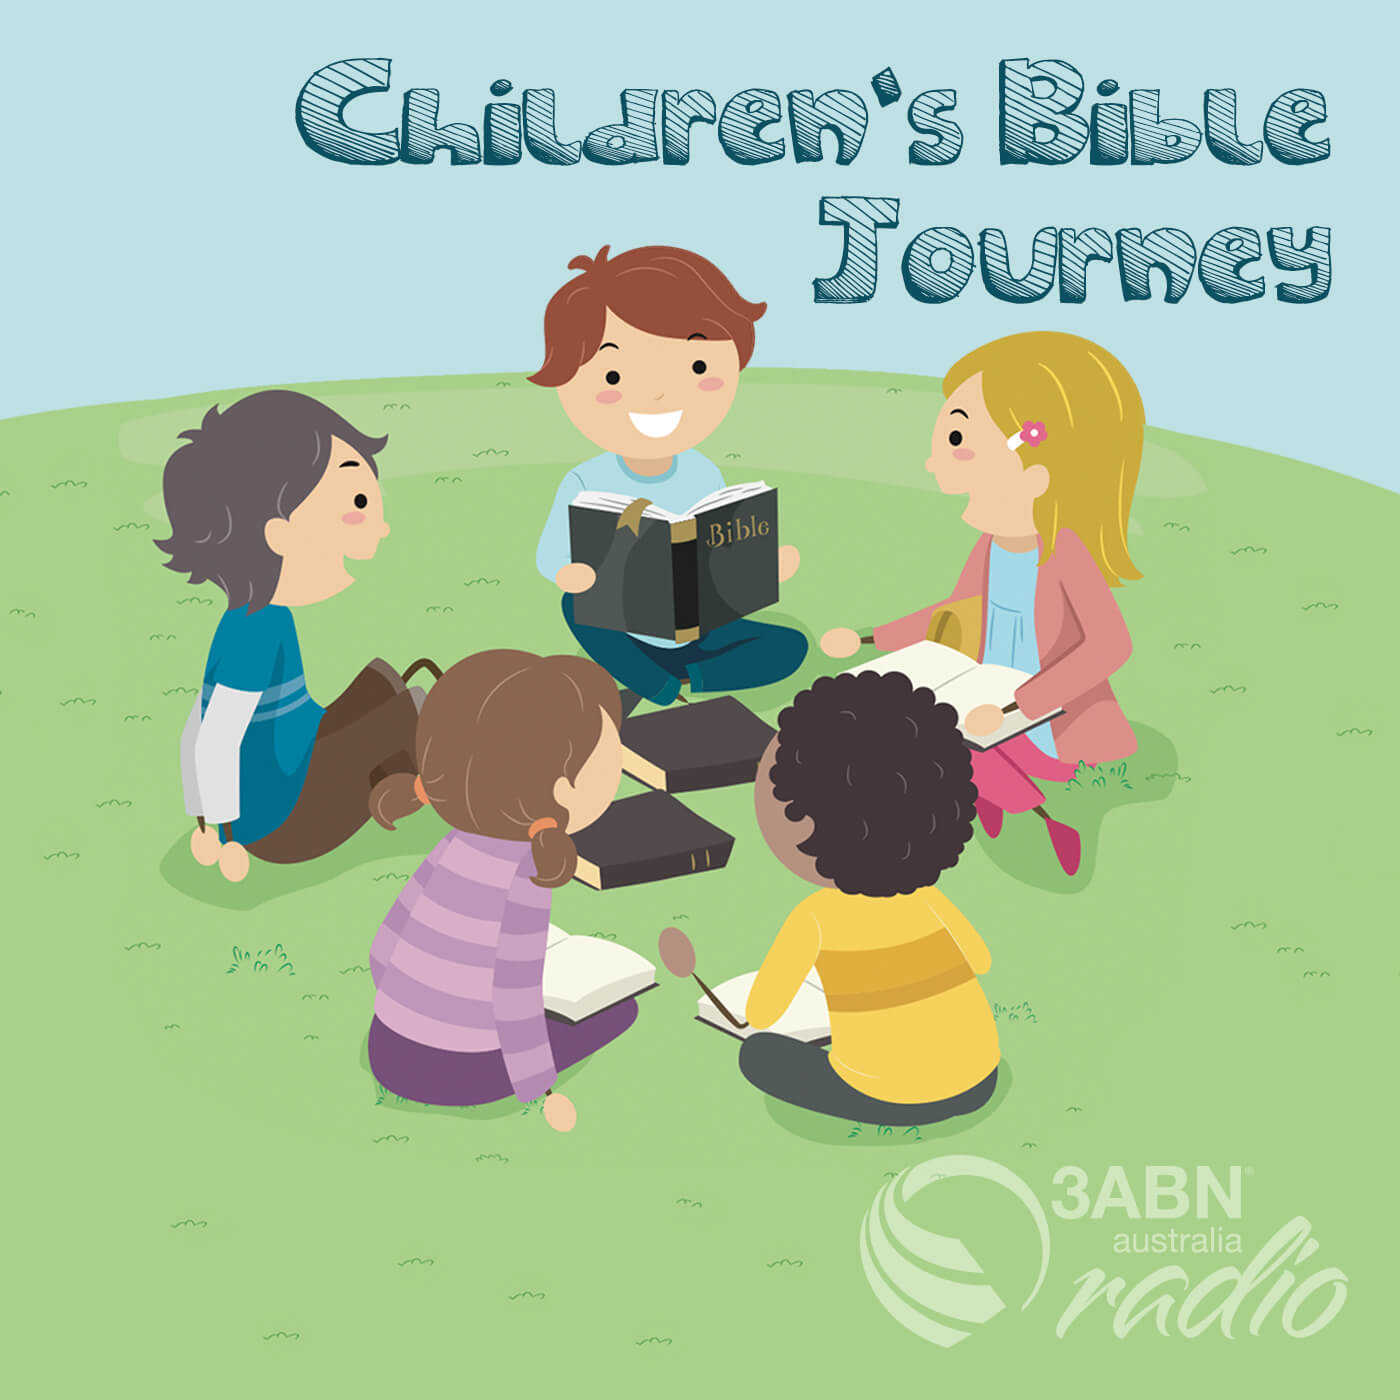 Children's Bible Journey - 2132